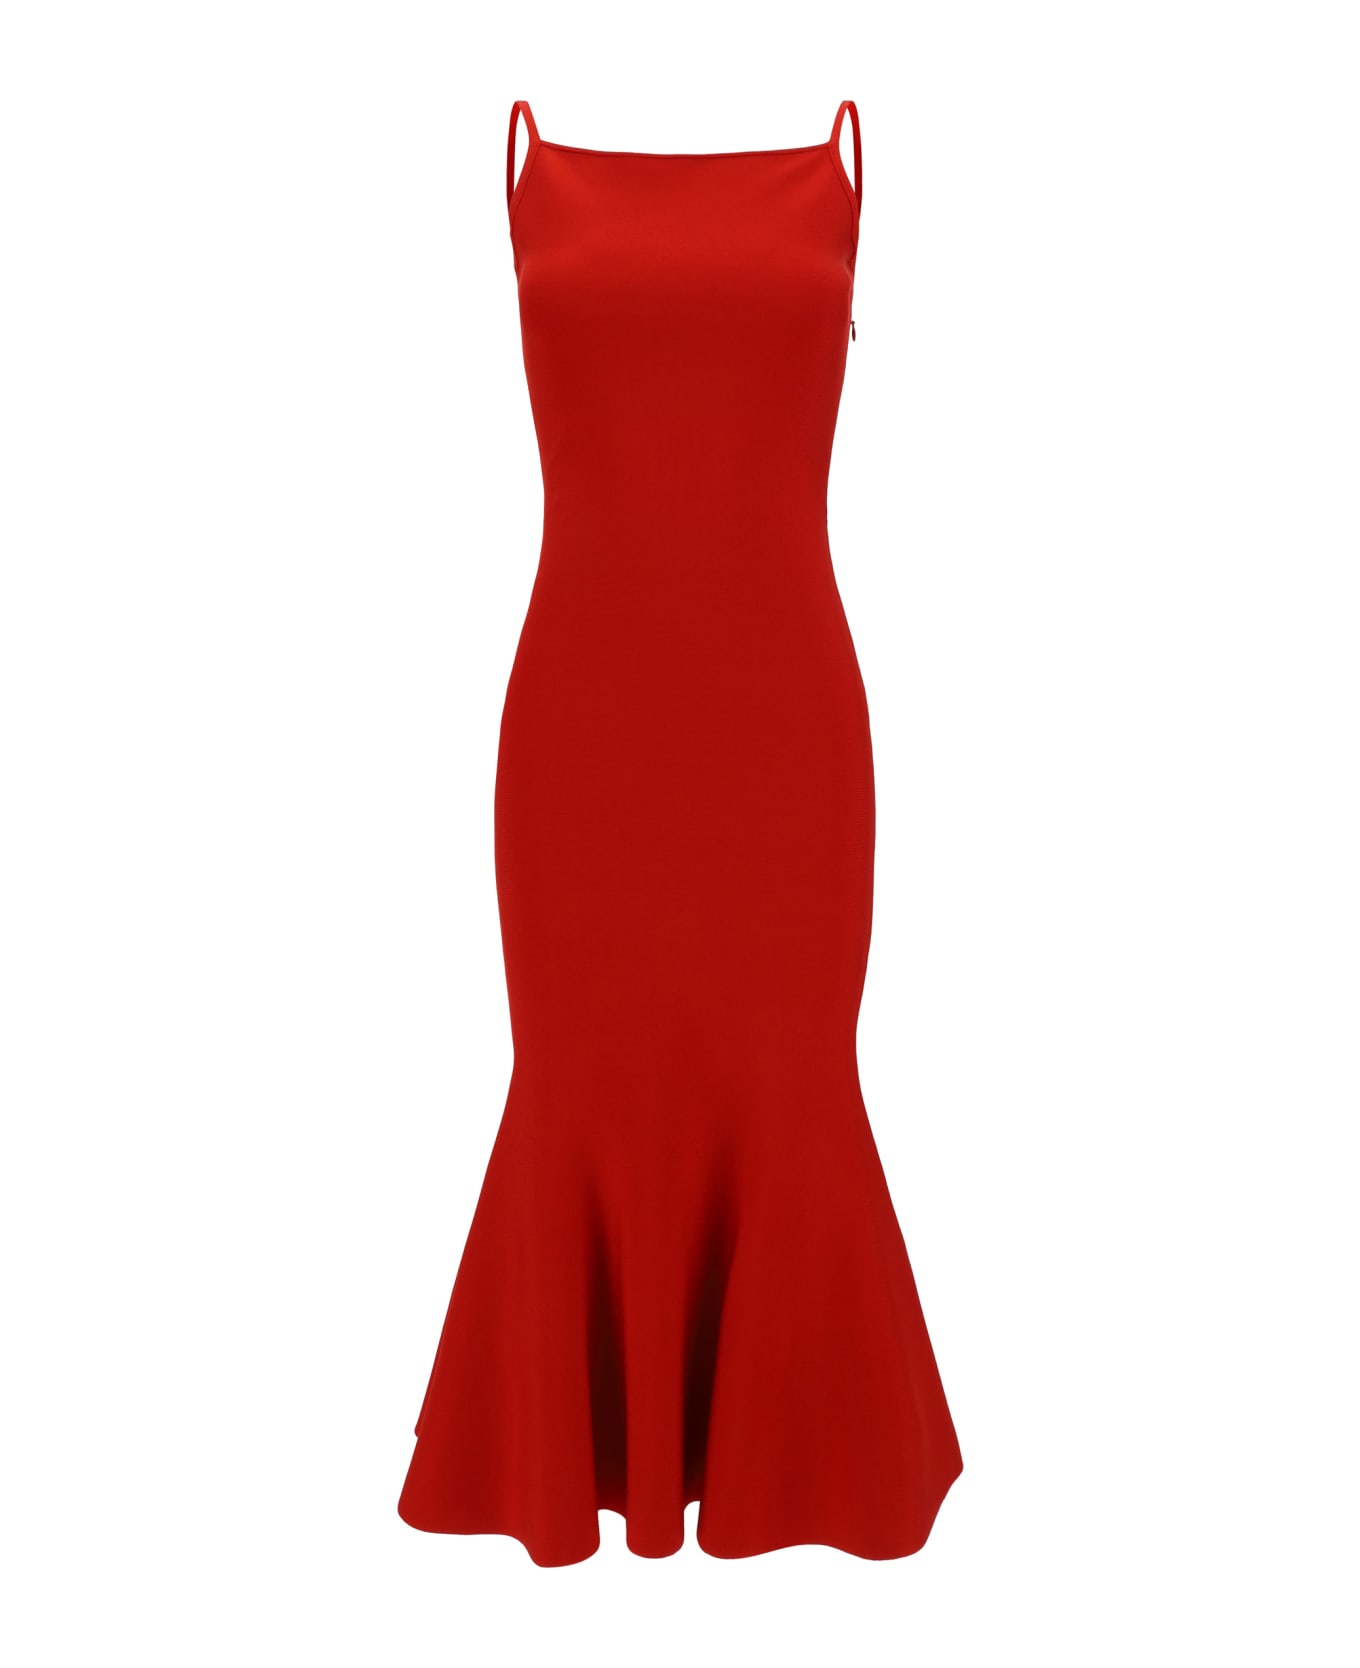 Alexander McQueen Flared Knit Dress - Lust Red